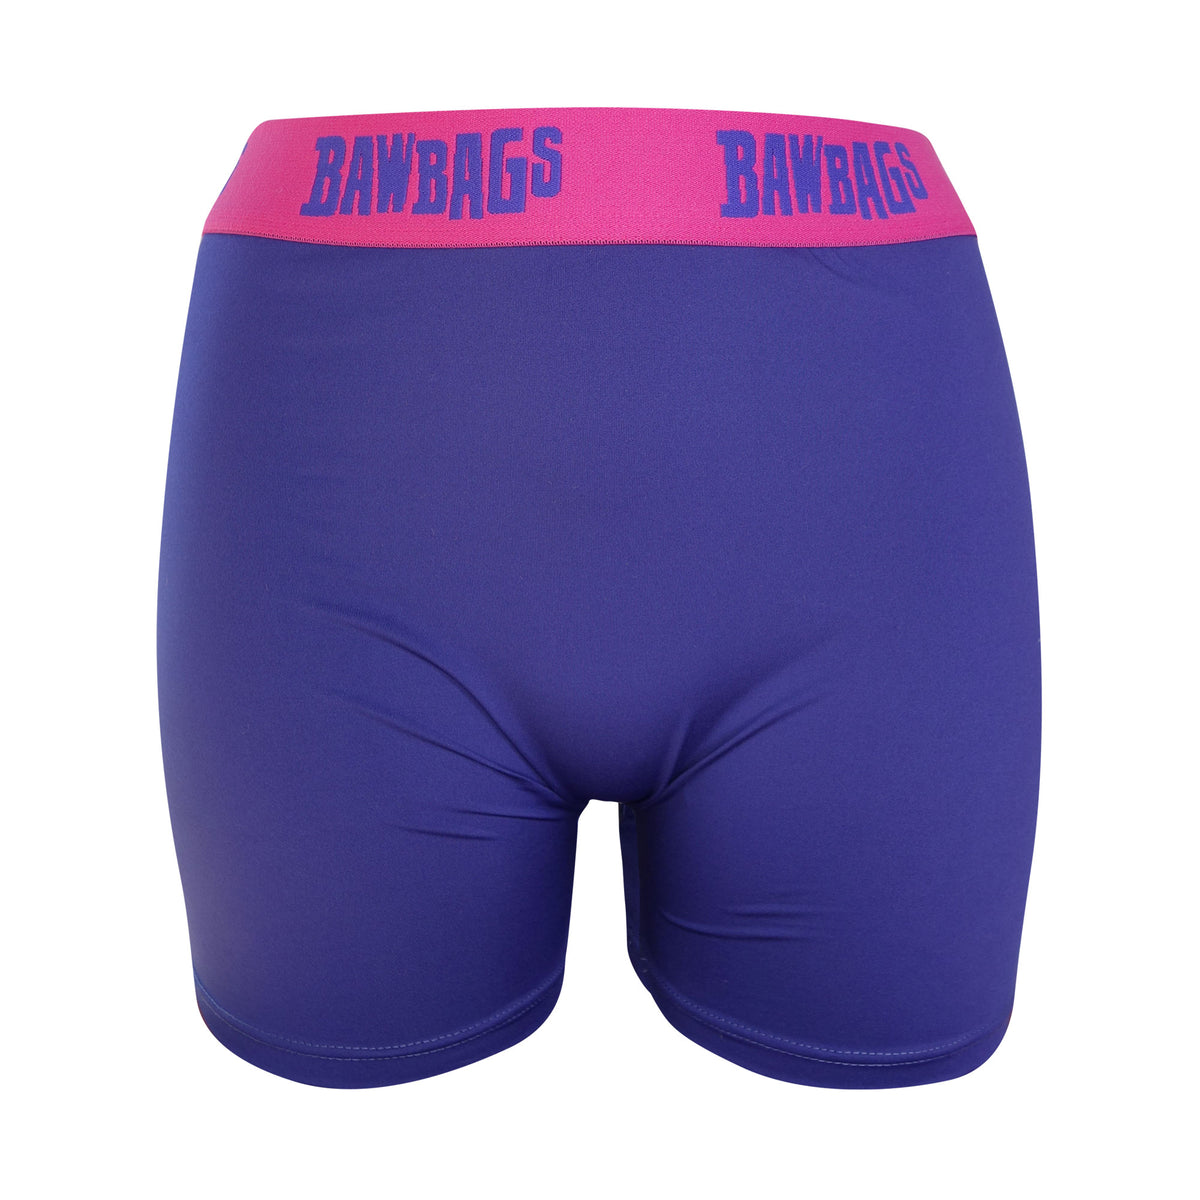 Women's Size 10 Underwear, Boxer Shorts & Bralettes - Bawbags